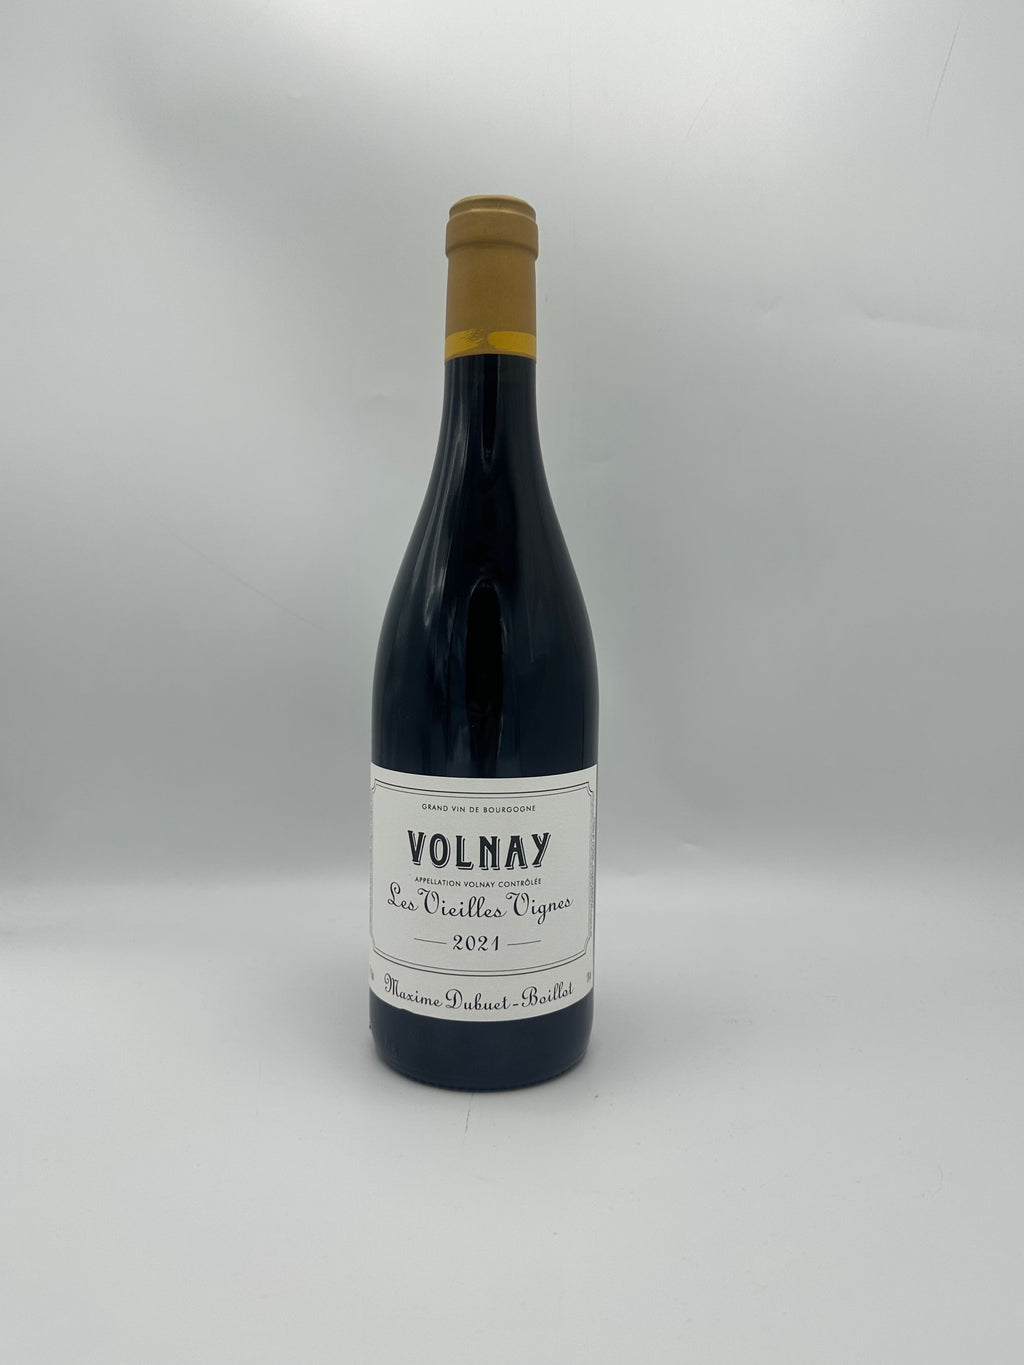 Volnay “Les Vieilles Vignes” 2021 Red - Maxime Dubuet Boillot 